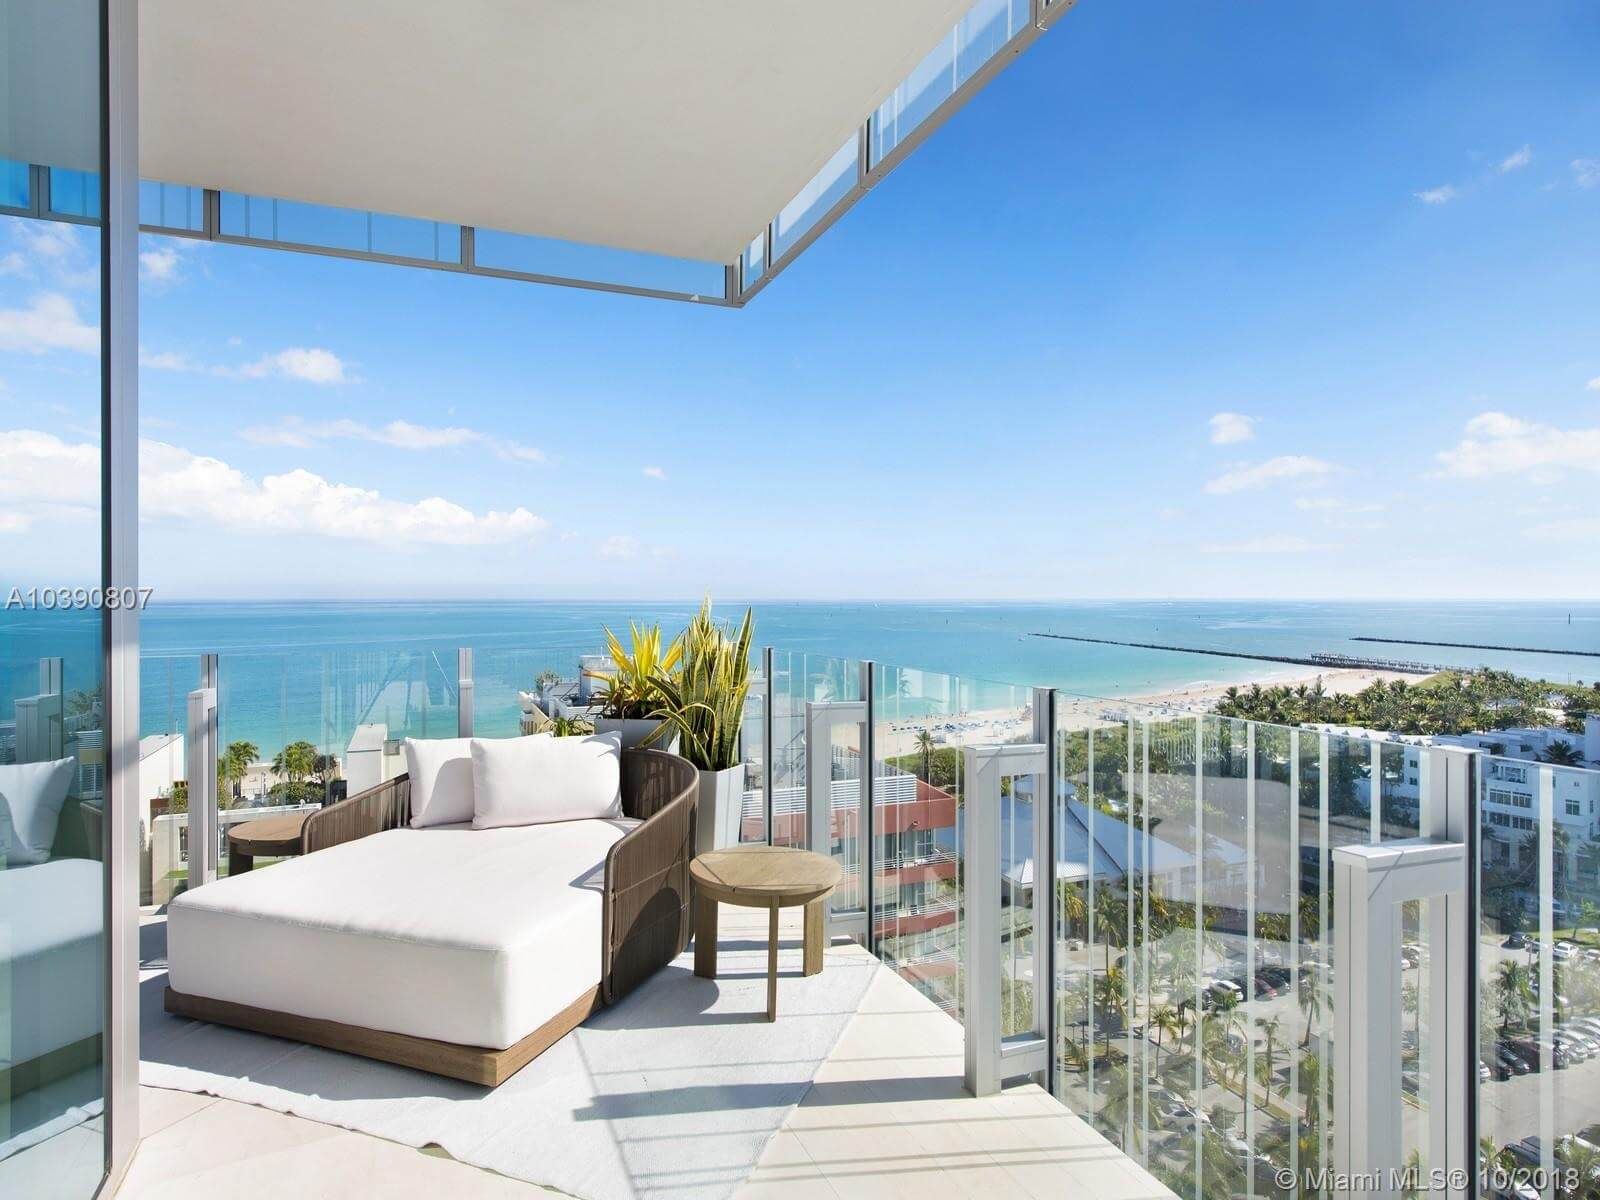 Glass Miami Beach - Views From the Balcony